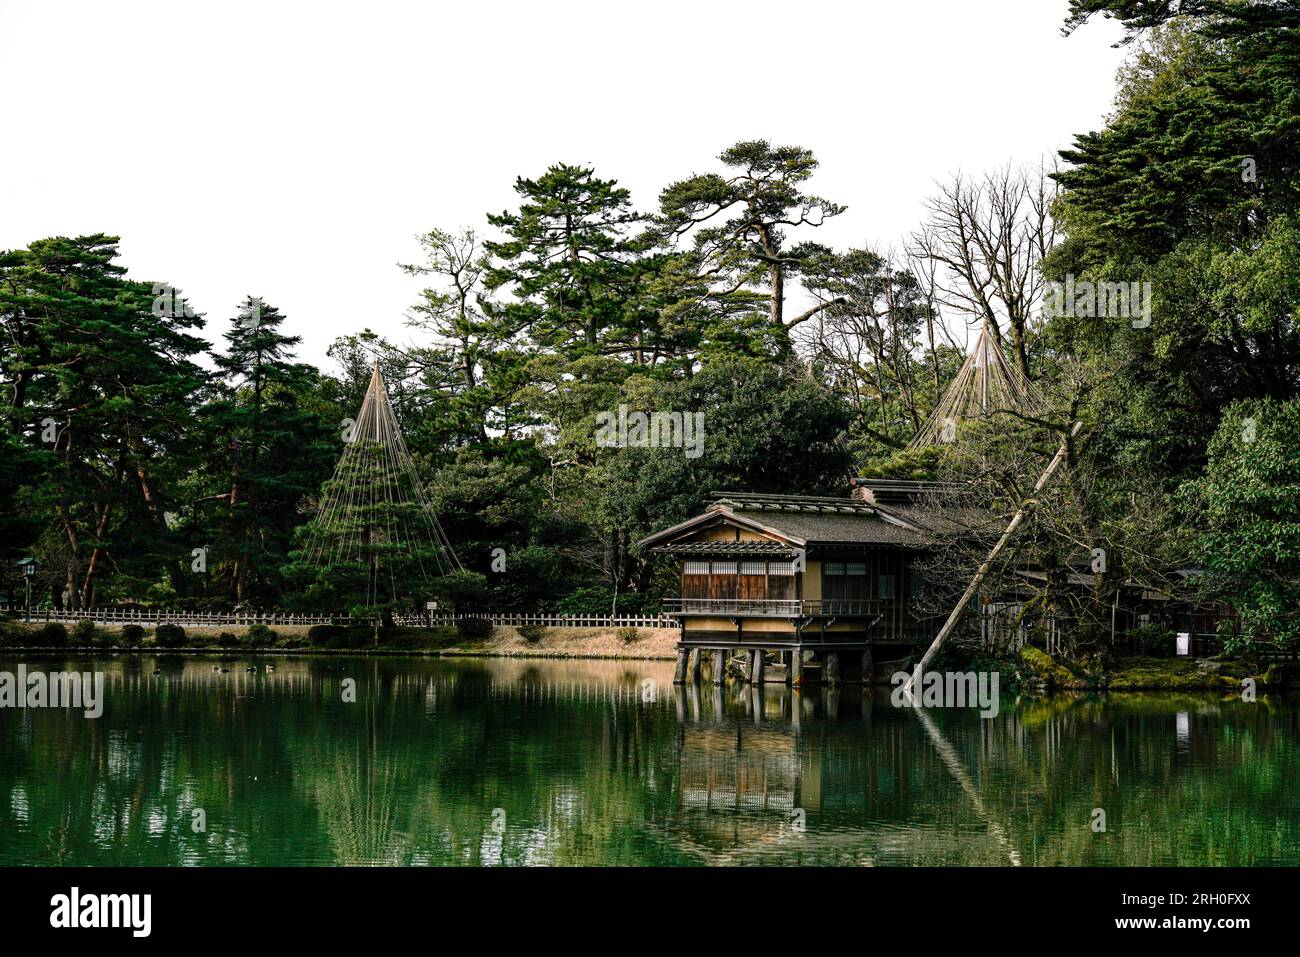 Uchi-hashi tei tea house by the Kasumiga-ike pond in Kenrokuen Garden, Kanazawa, Japan. Stock Photo